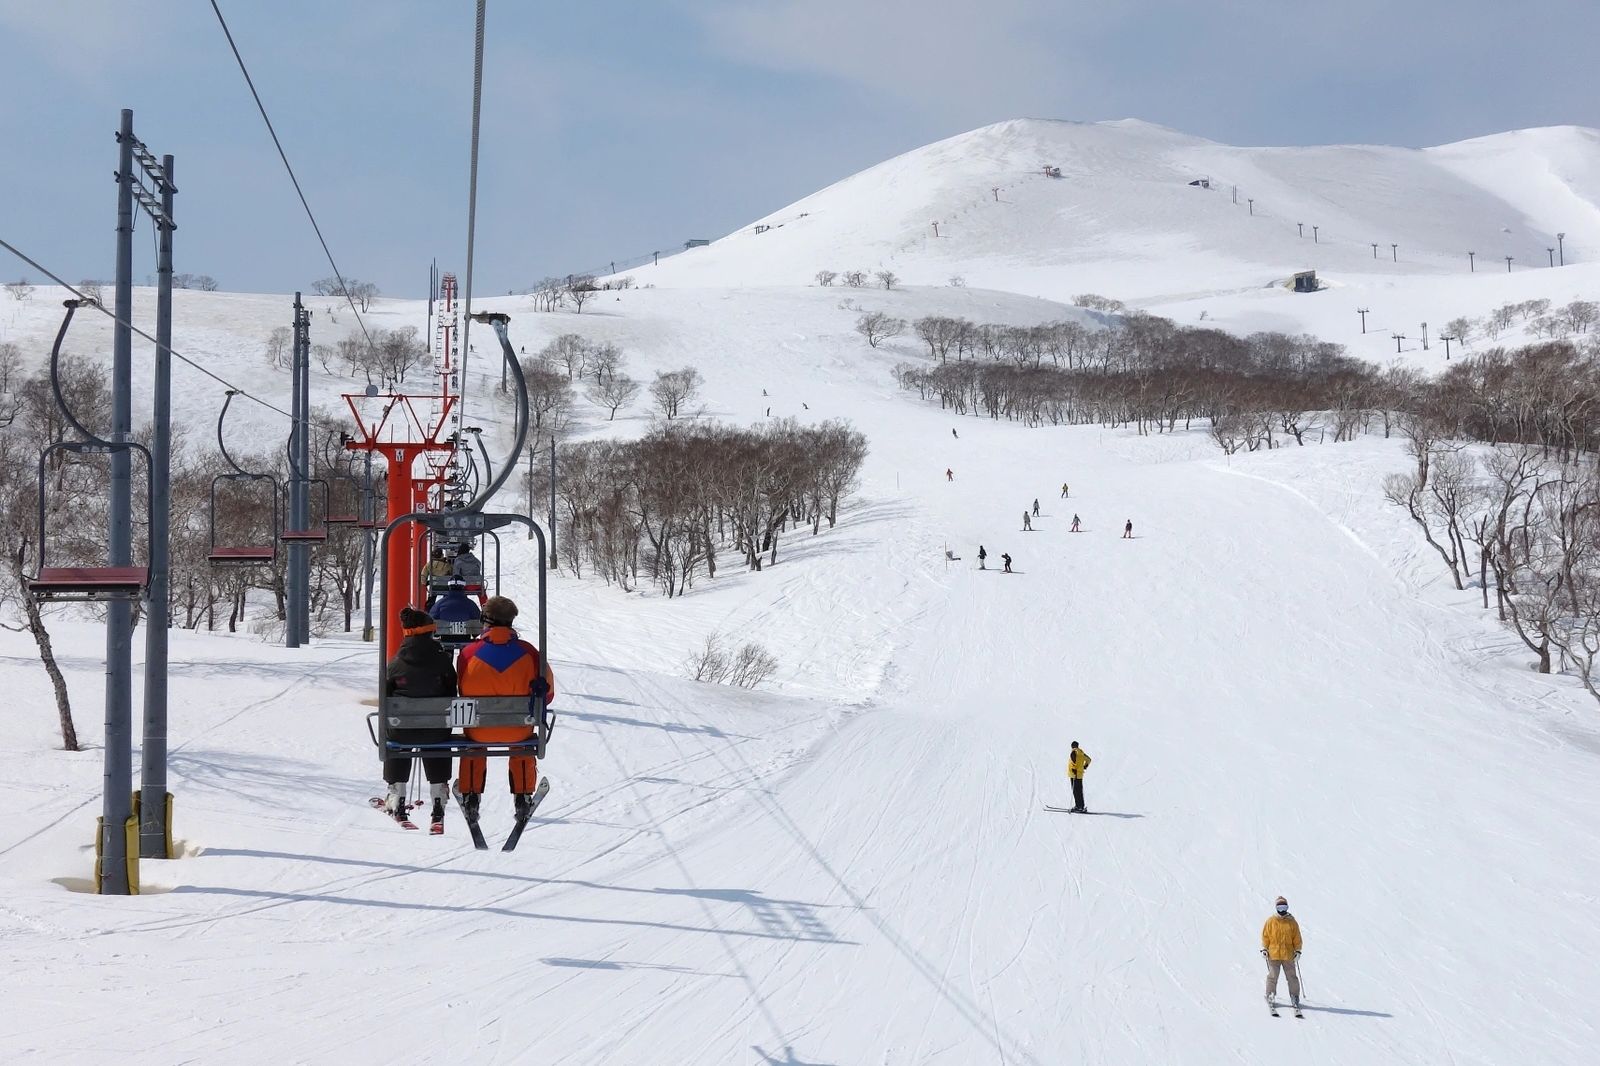 two skiers sitting on ski lift over snowy mountain niseko annupuri japan grey sky ski resort hotel